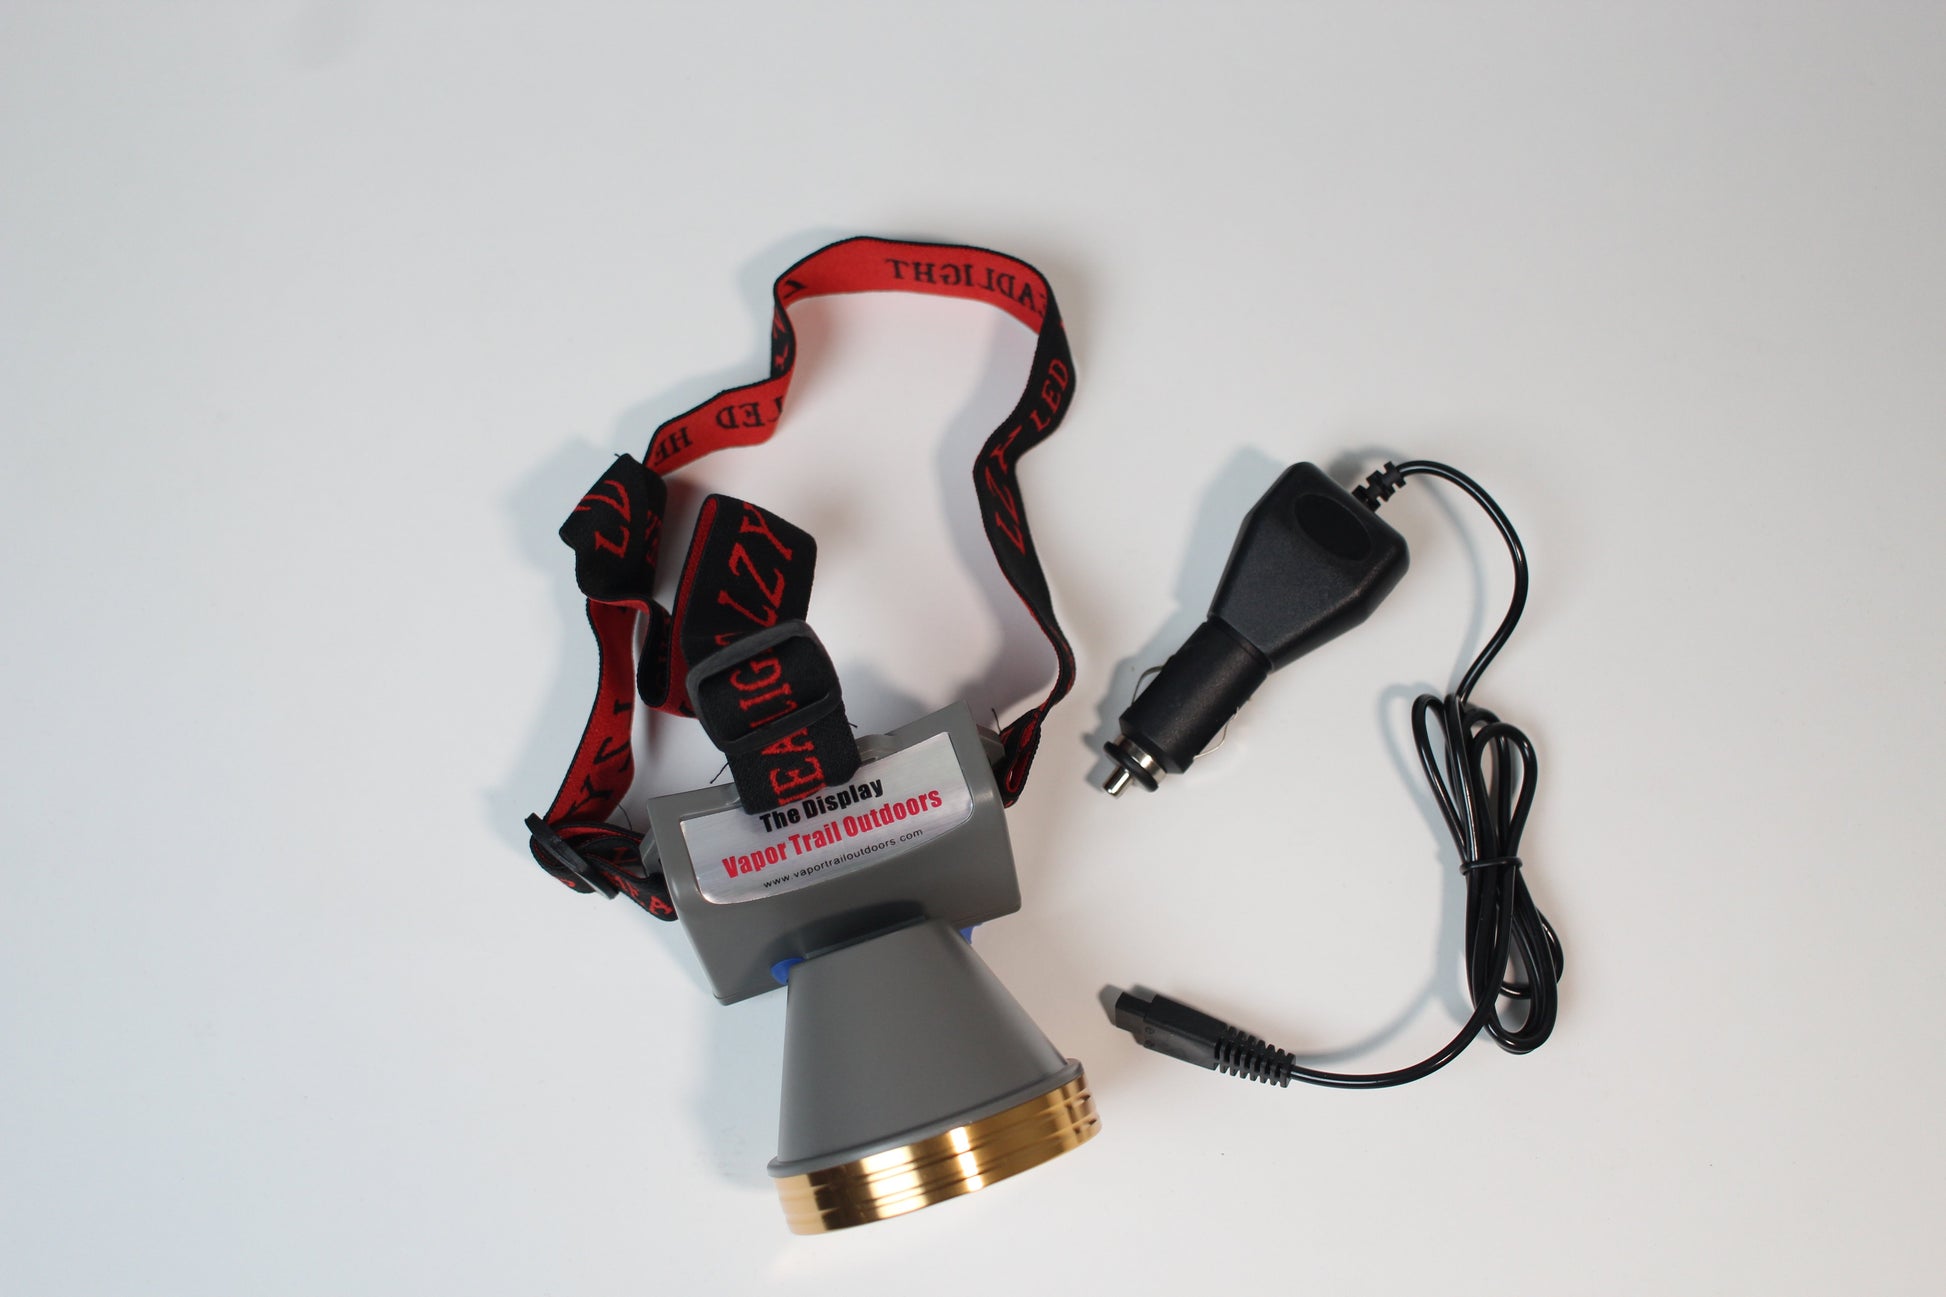 Headlamps - The Display - 5 Watt Headlamp